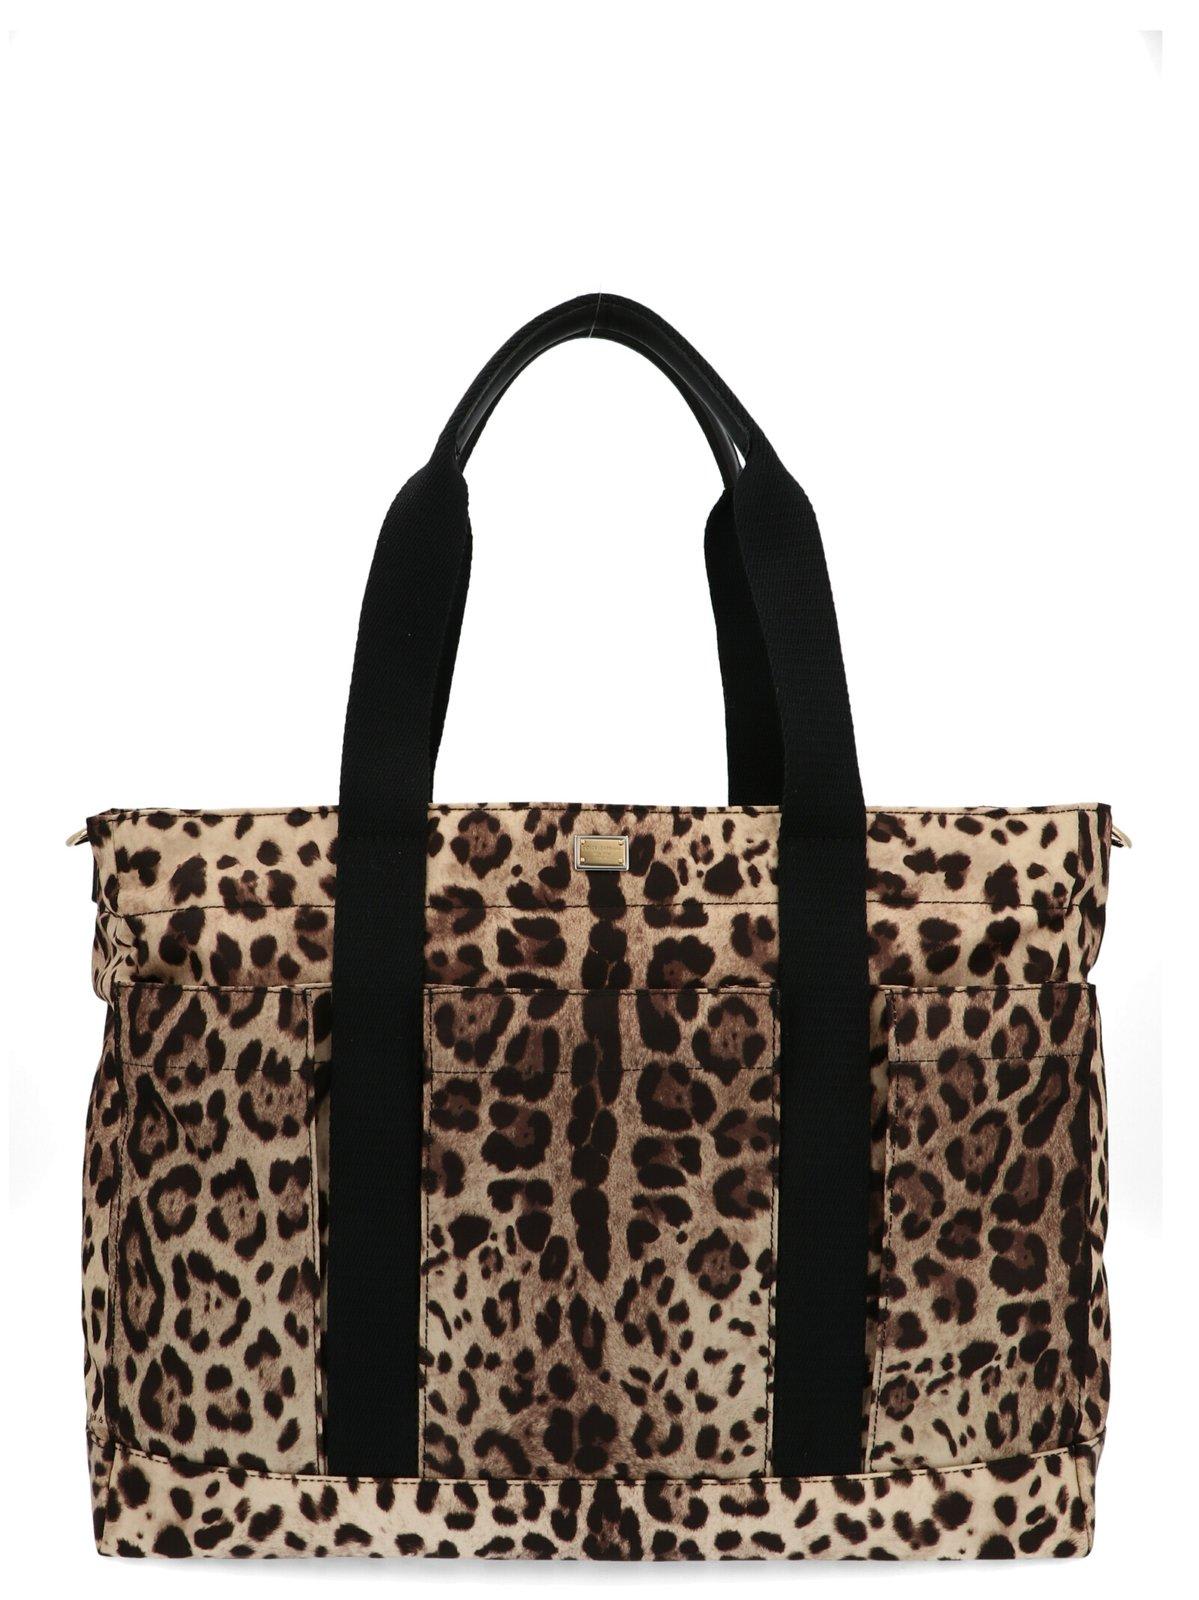 Dolce & Gabbana Animal Print Tote Bag